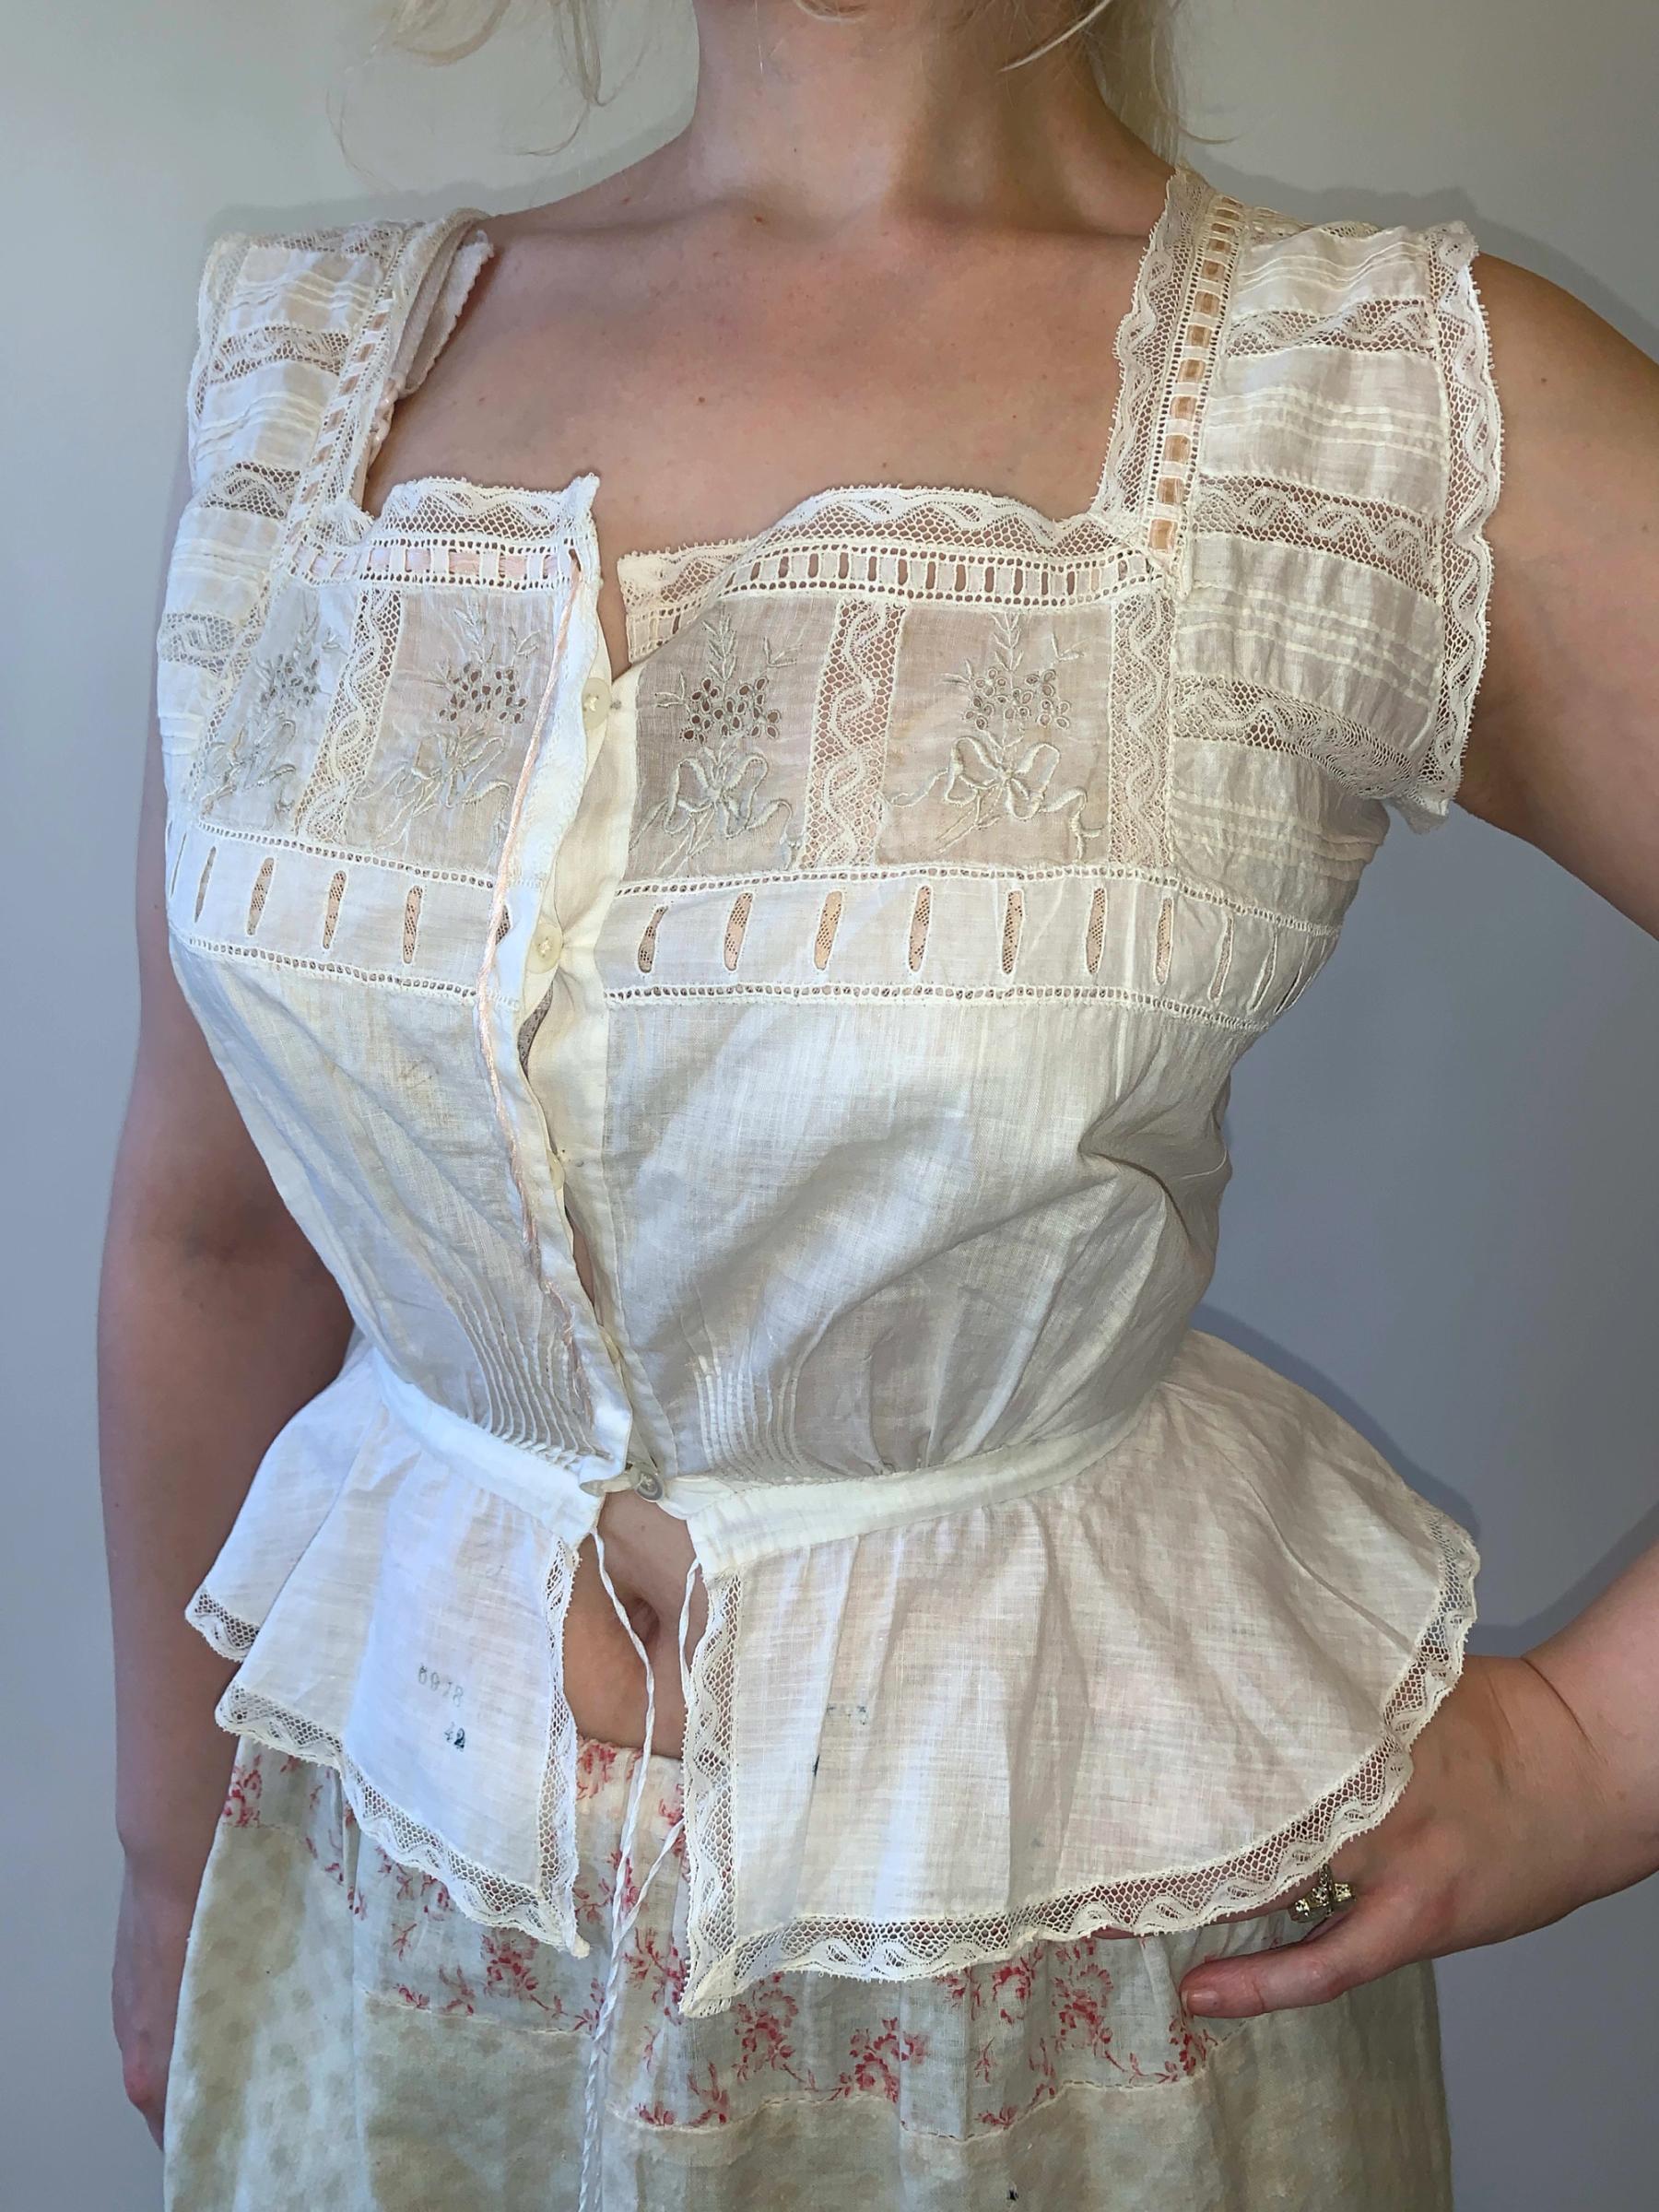 antique corset cover